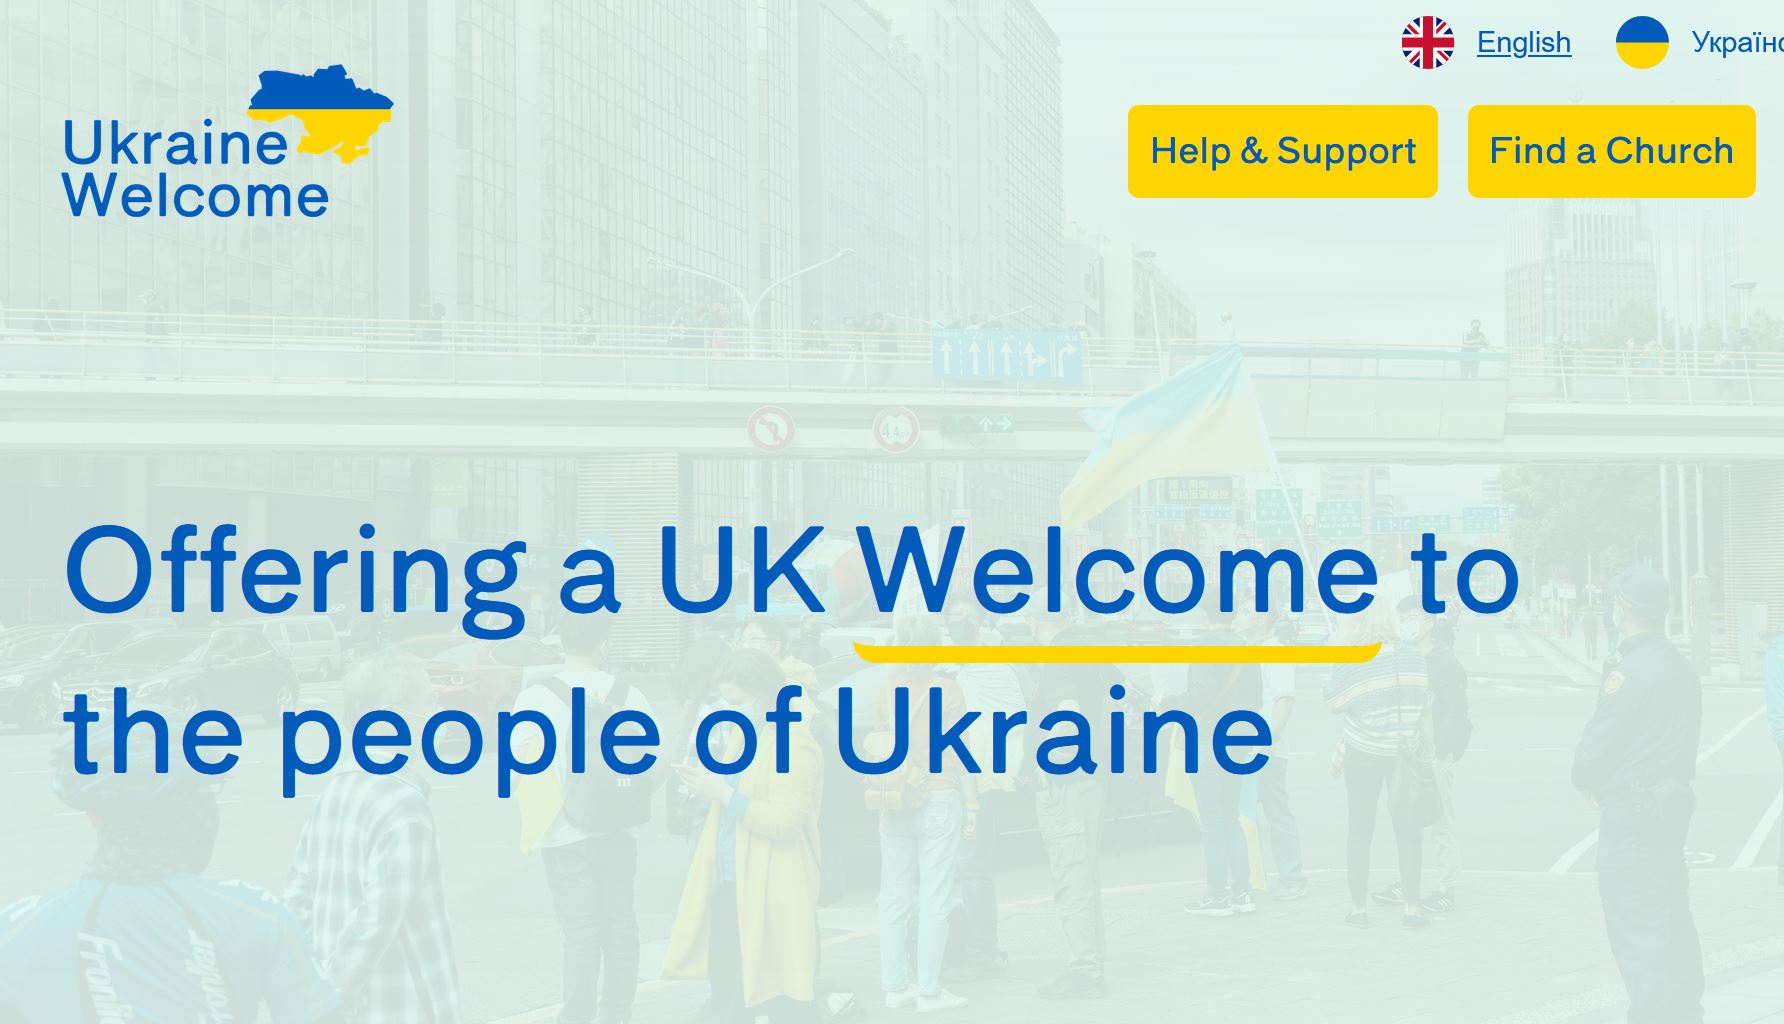 Western Europe: Churches prepare to receive Ukrainian refugees